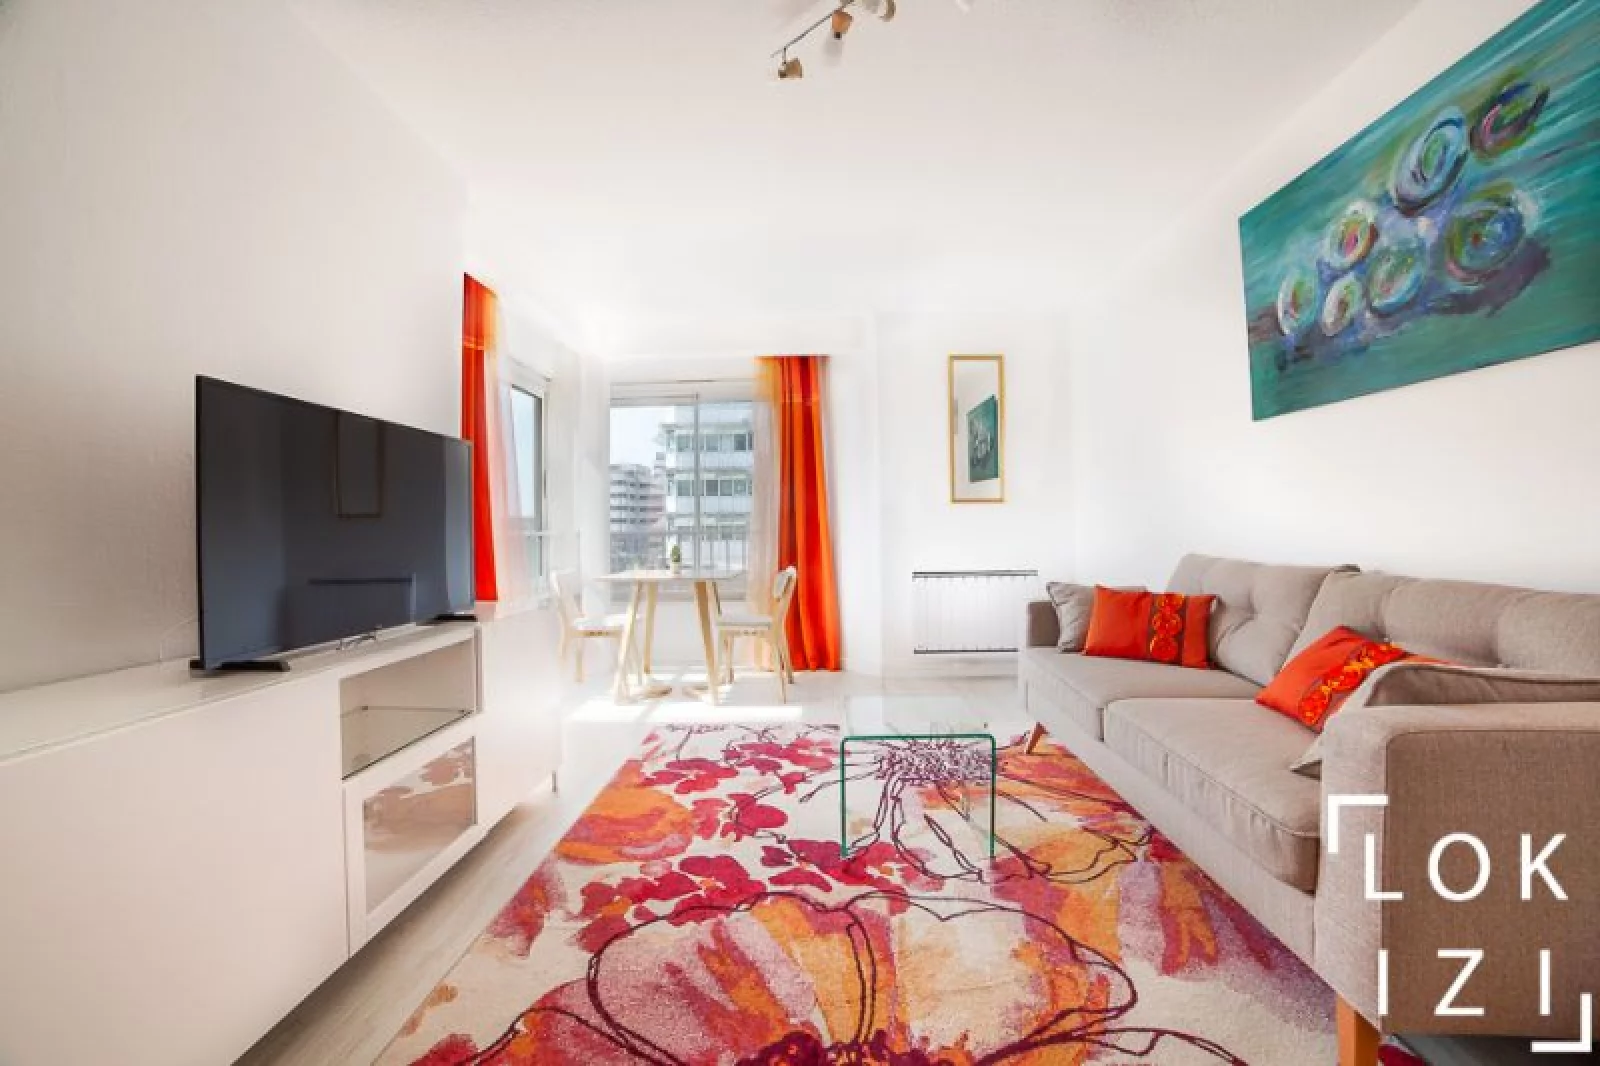 Location appartement meubl 2 pices 50m (Bordeaux - Mriadeck)